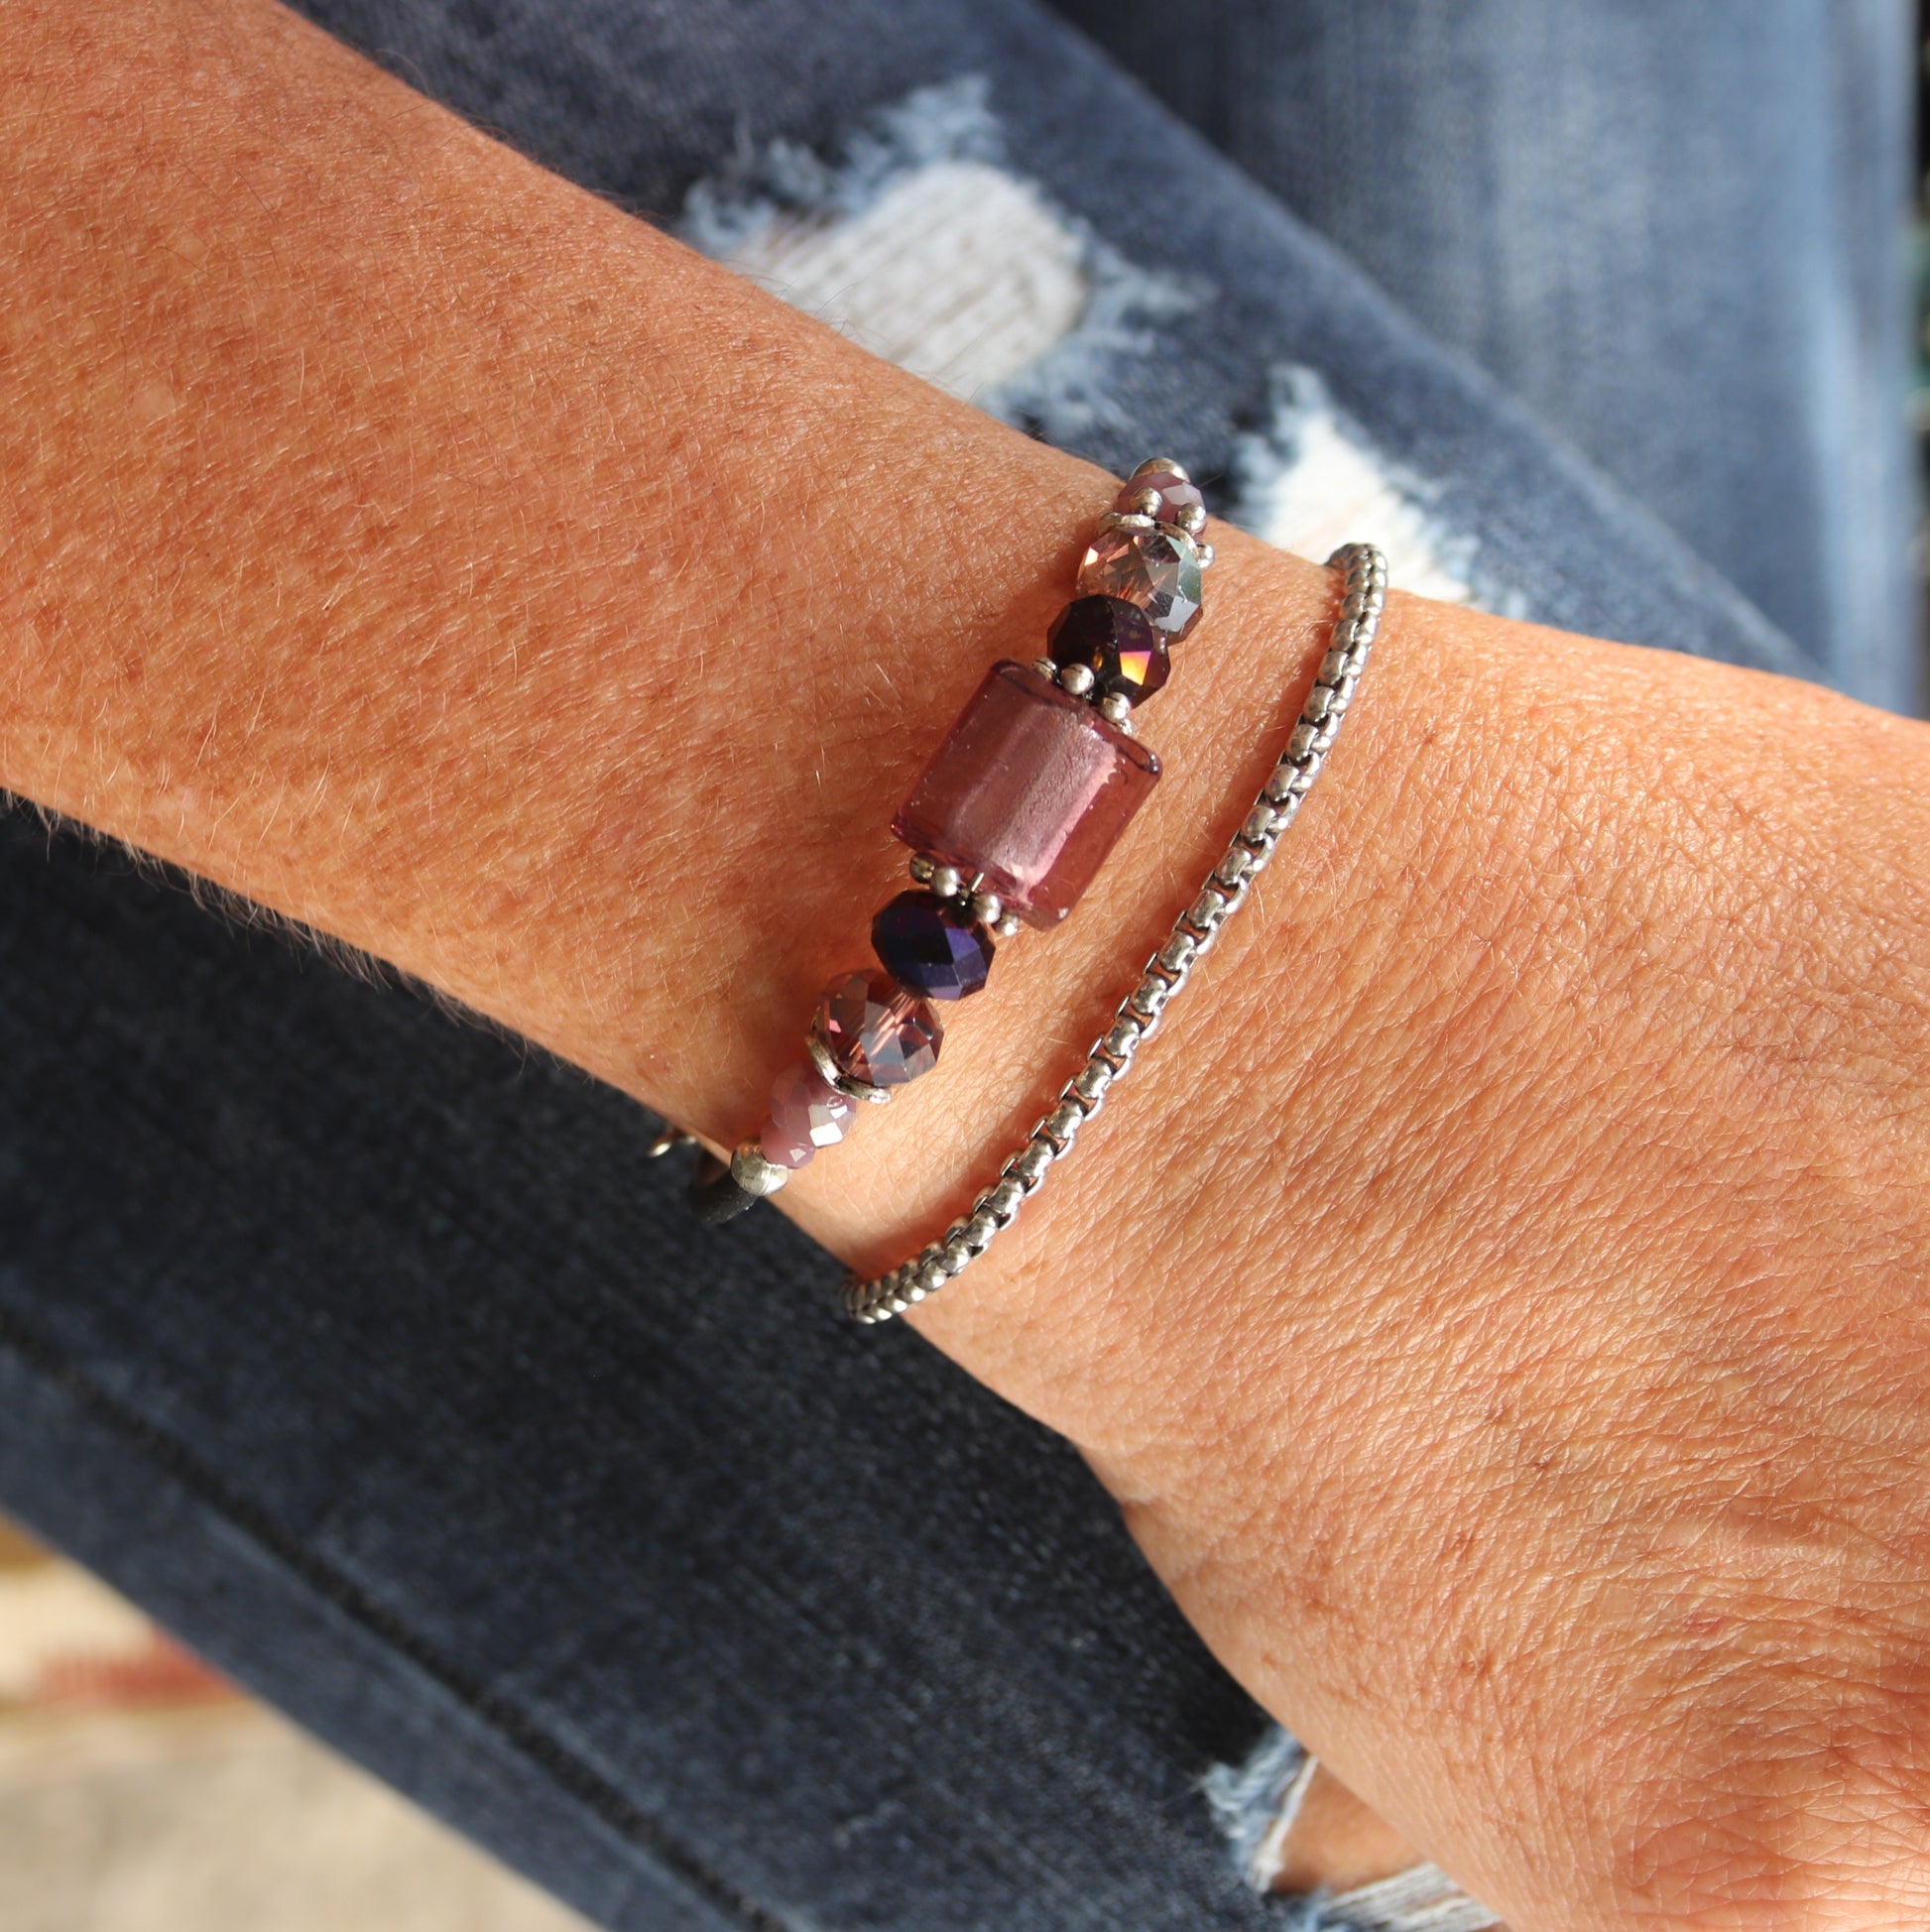 Wrap Bracelet - Amethyst colored glass beads